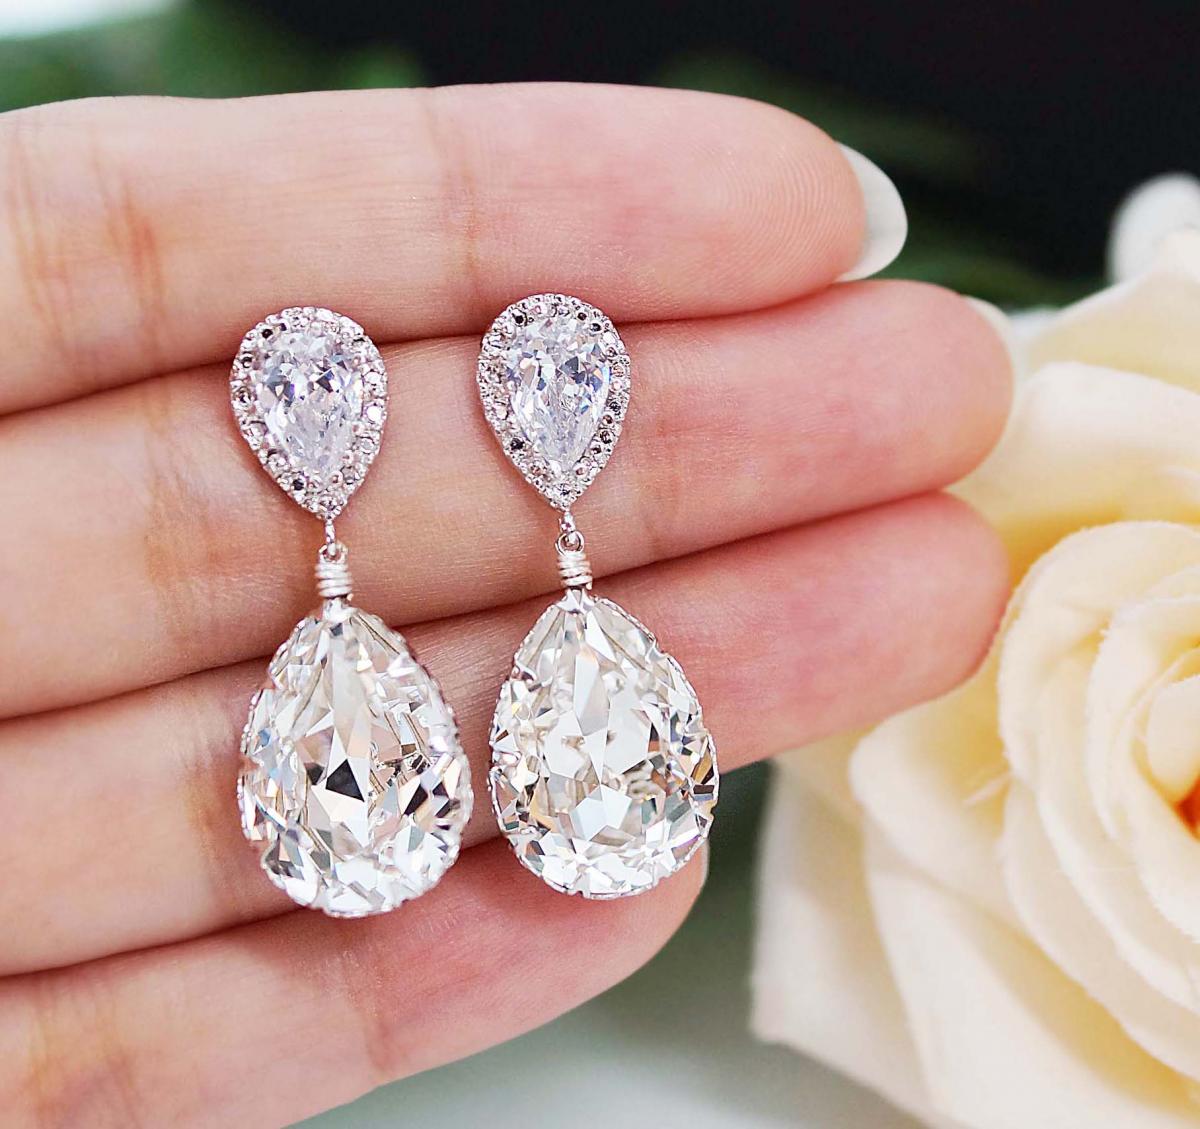 Wedding Jewelry Bridal Earrings Bridesmaid Earrings Cubic Zirconia Earrings With Clear White Swarovski Crystal Tear Drops